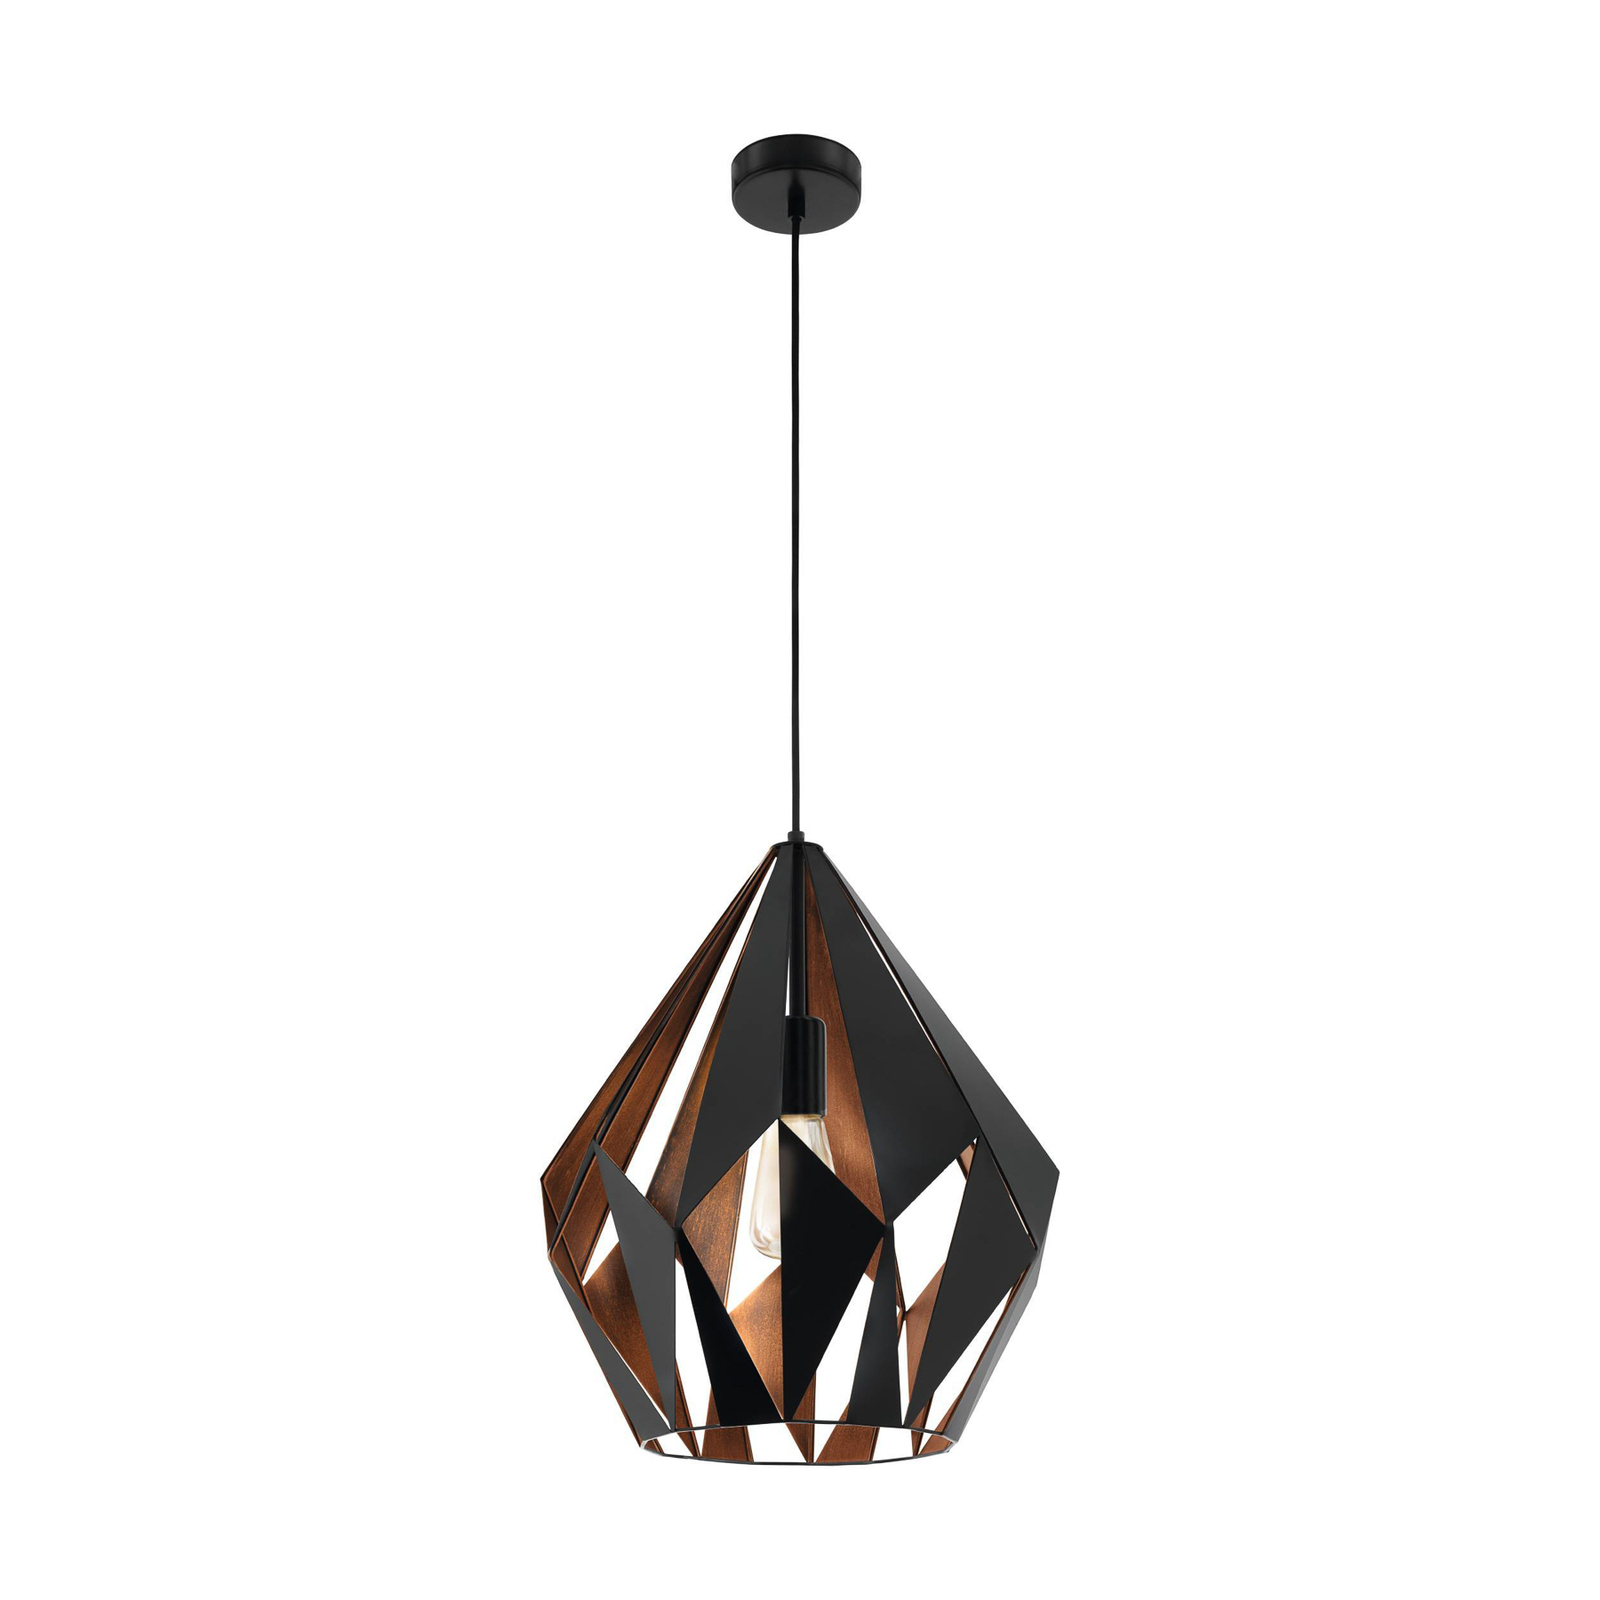 Carlton hanglamp, zwart/koper, Ø 38,5 cm